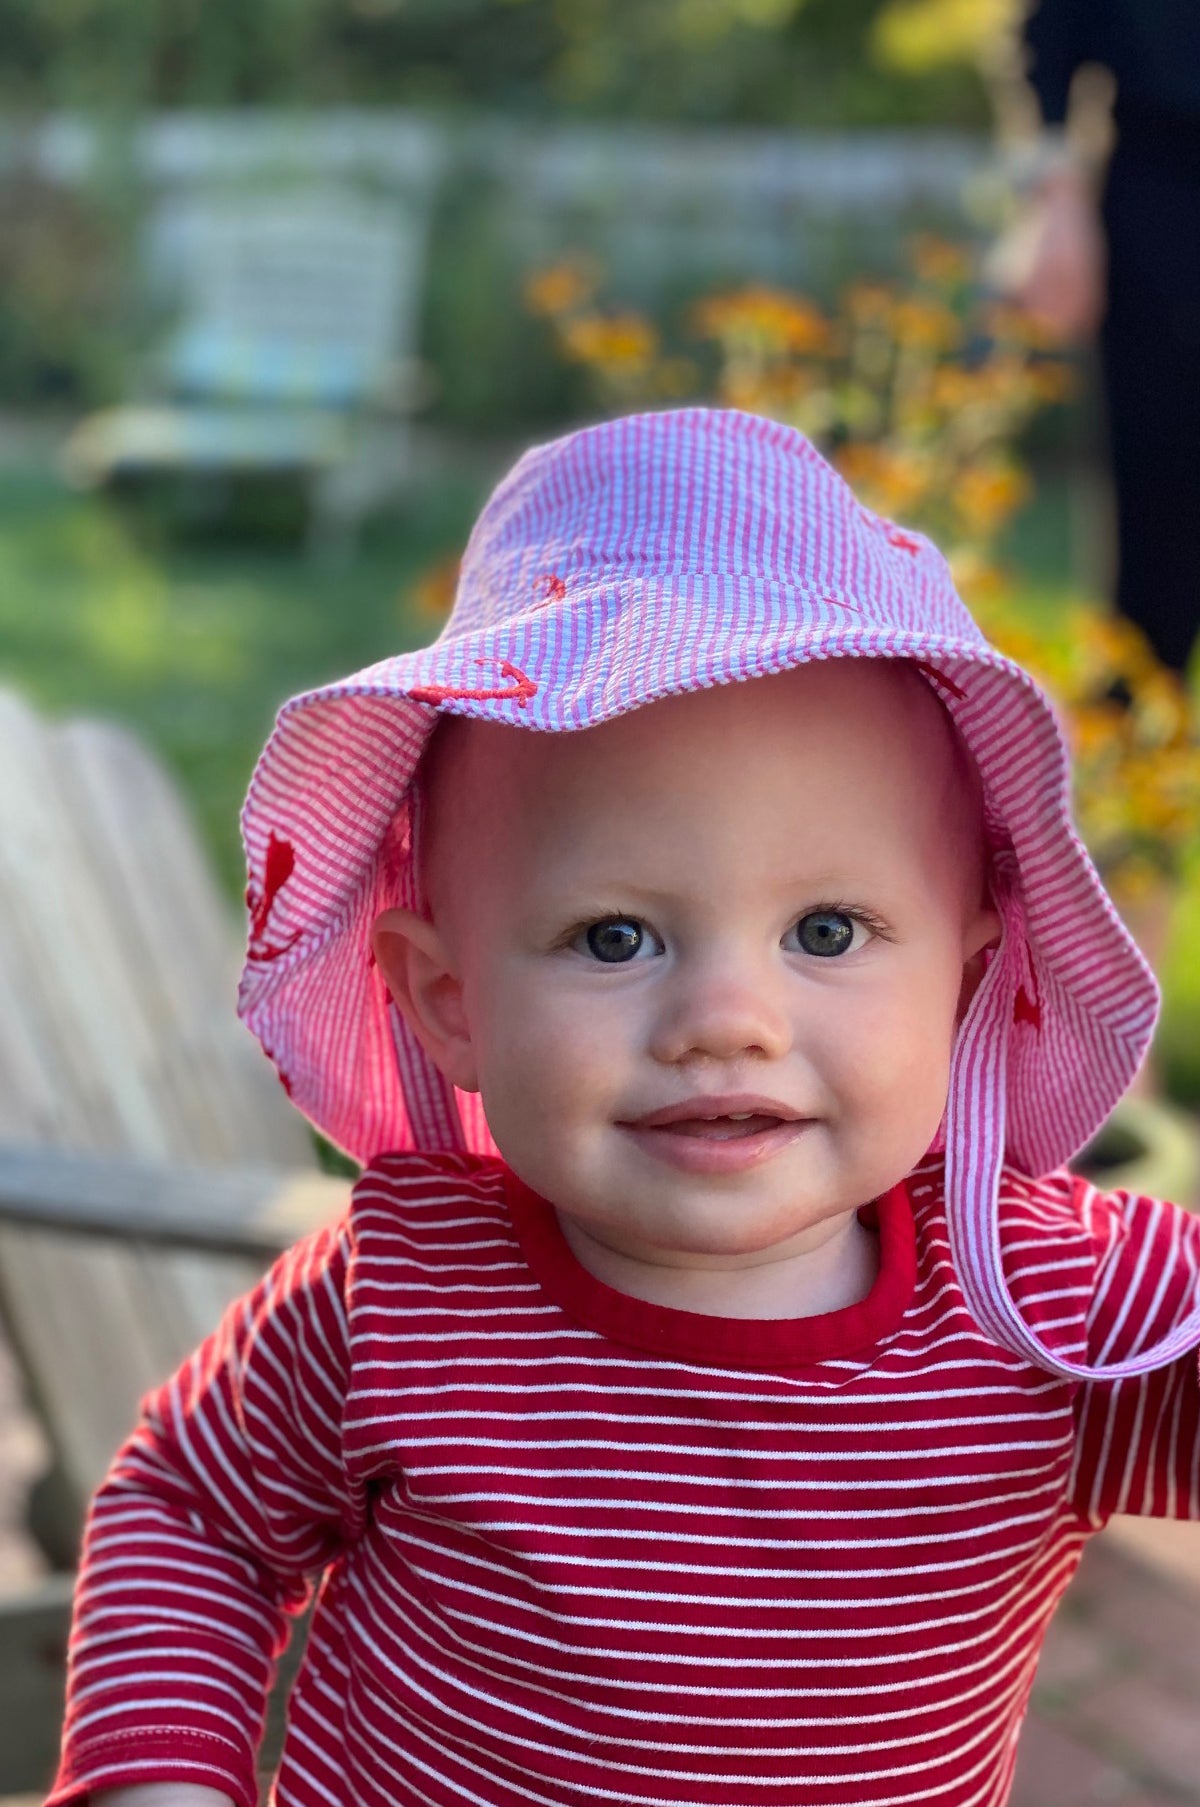 Pink Seersucker with Pink Embroidered Cape Cods Baby Bucket Hat